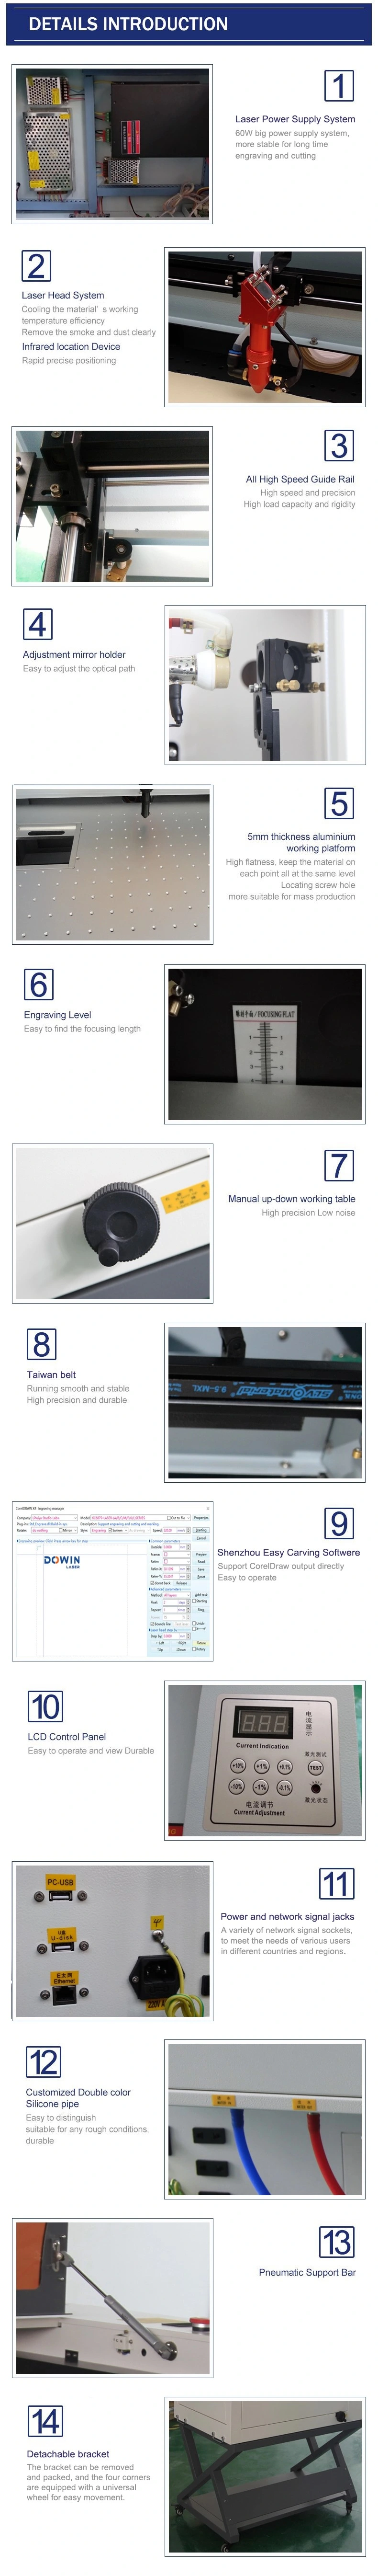 CO2 Laser Engraving Machine 4060 Laser Cutting Machine 6040 with USB Port